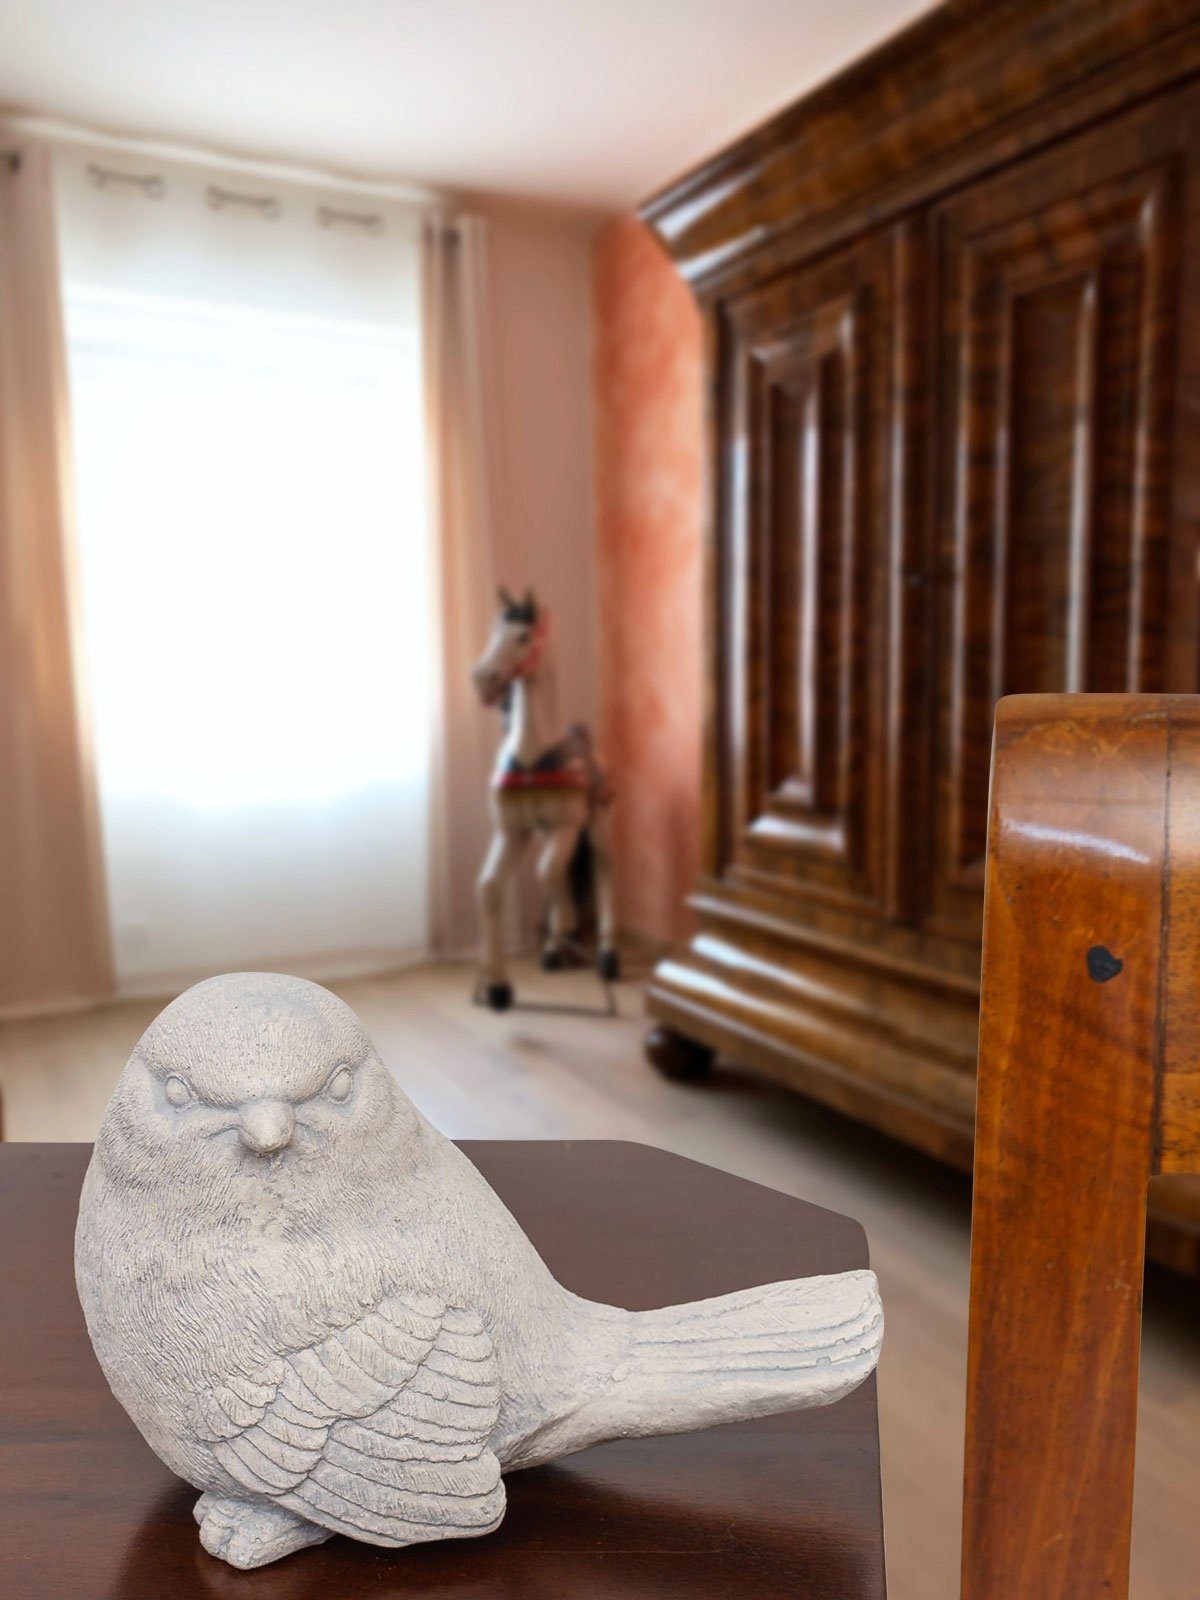 Aubaho Gartenfigur Statue Skulptur massiver Vogel Dekoration Figur Antik-Stil Kunststein